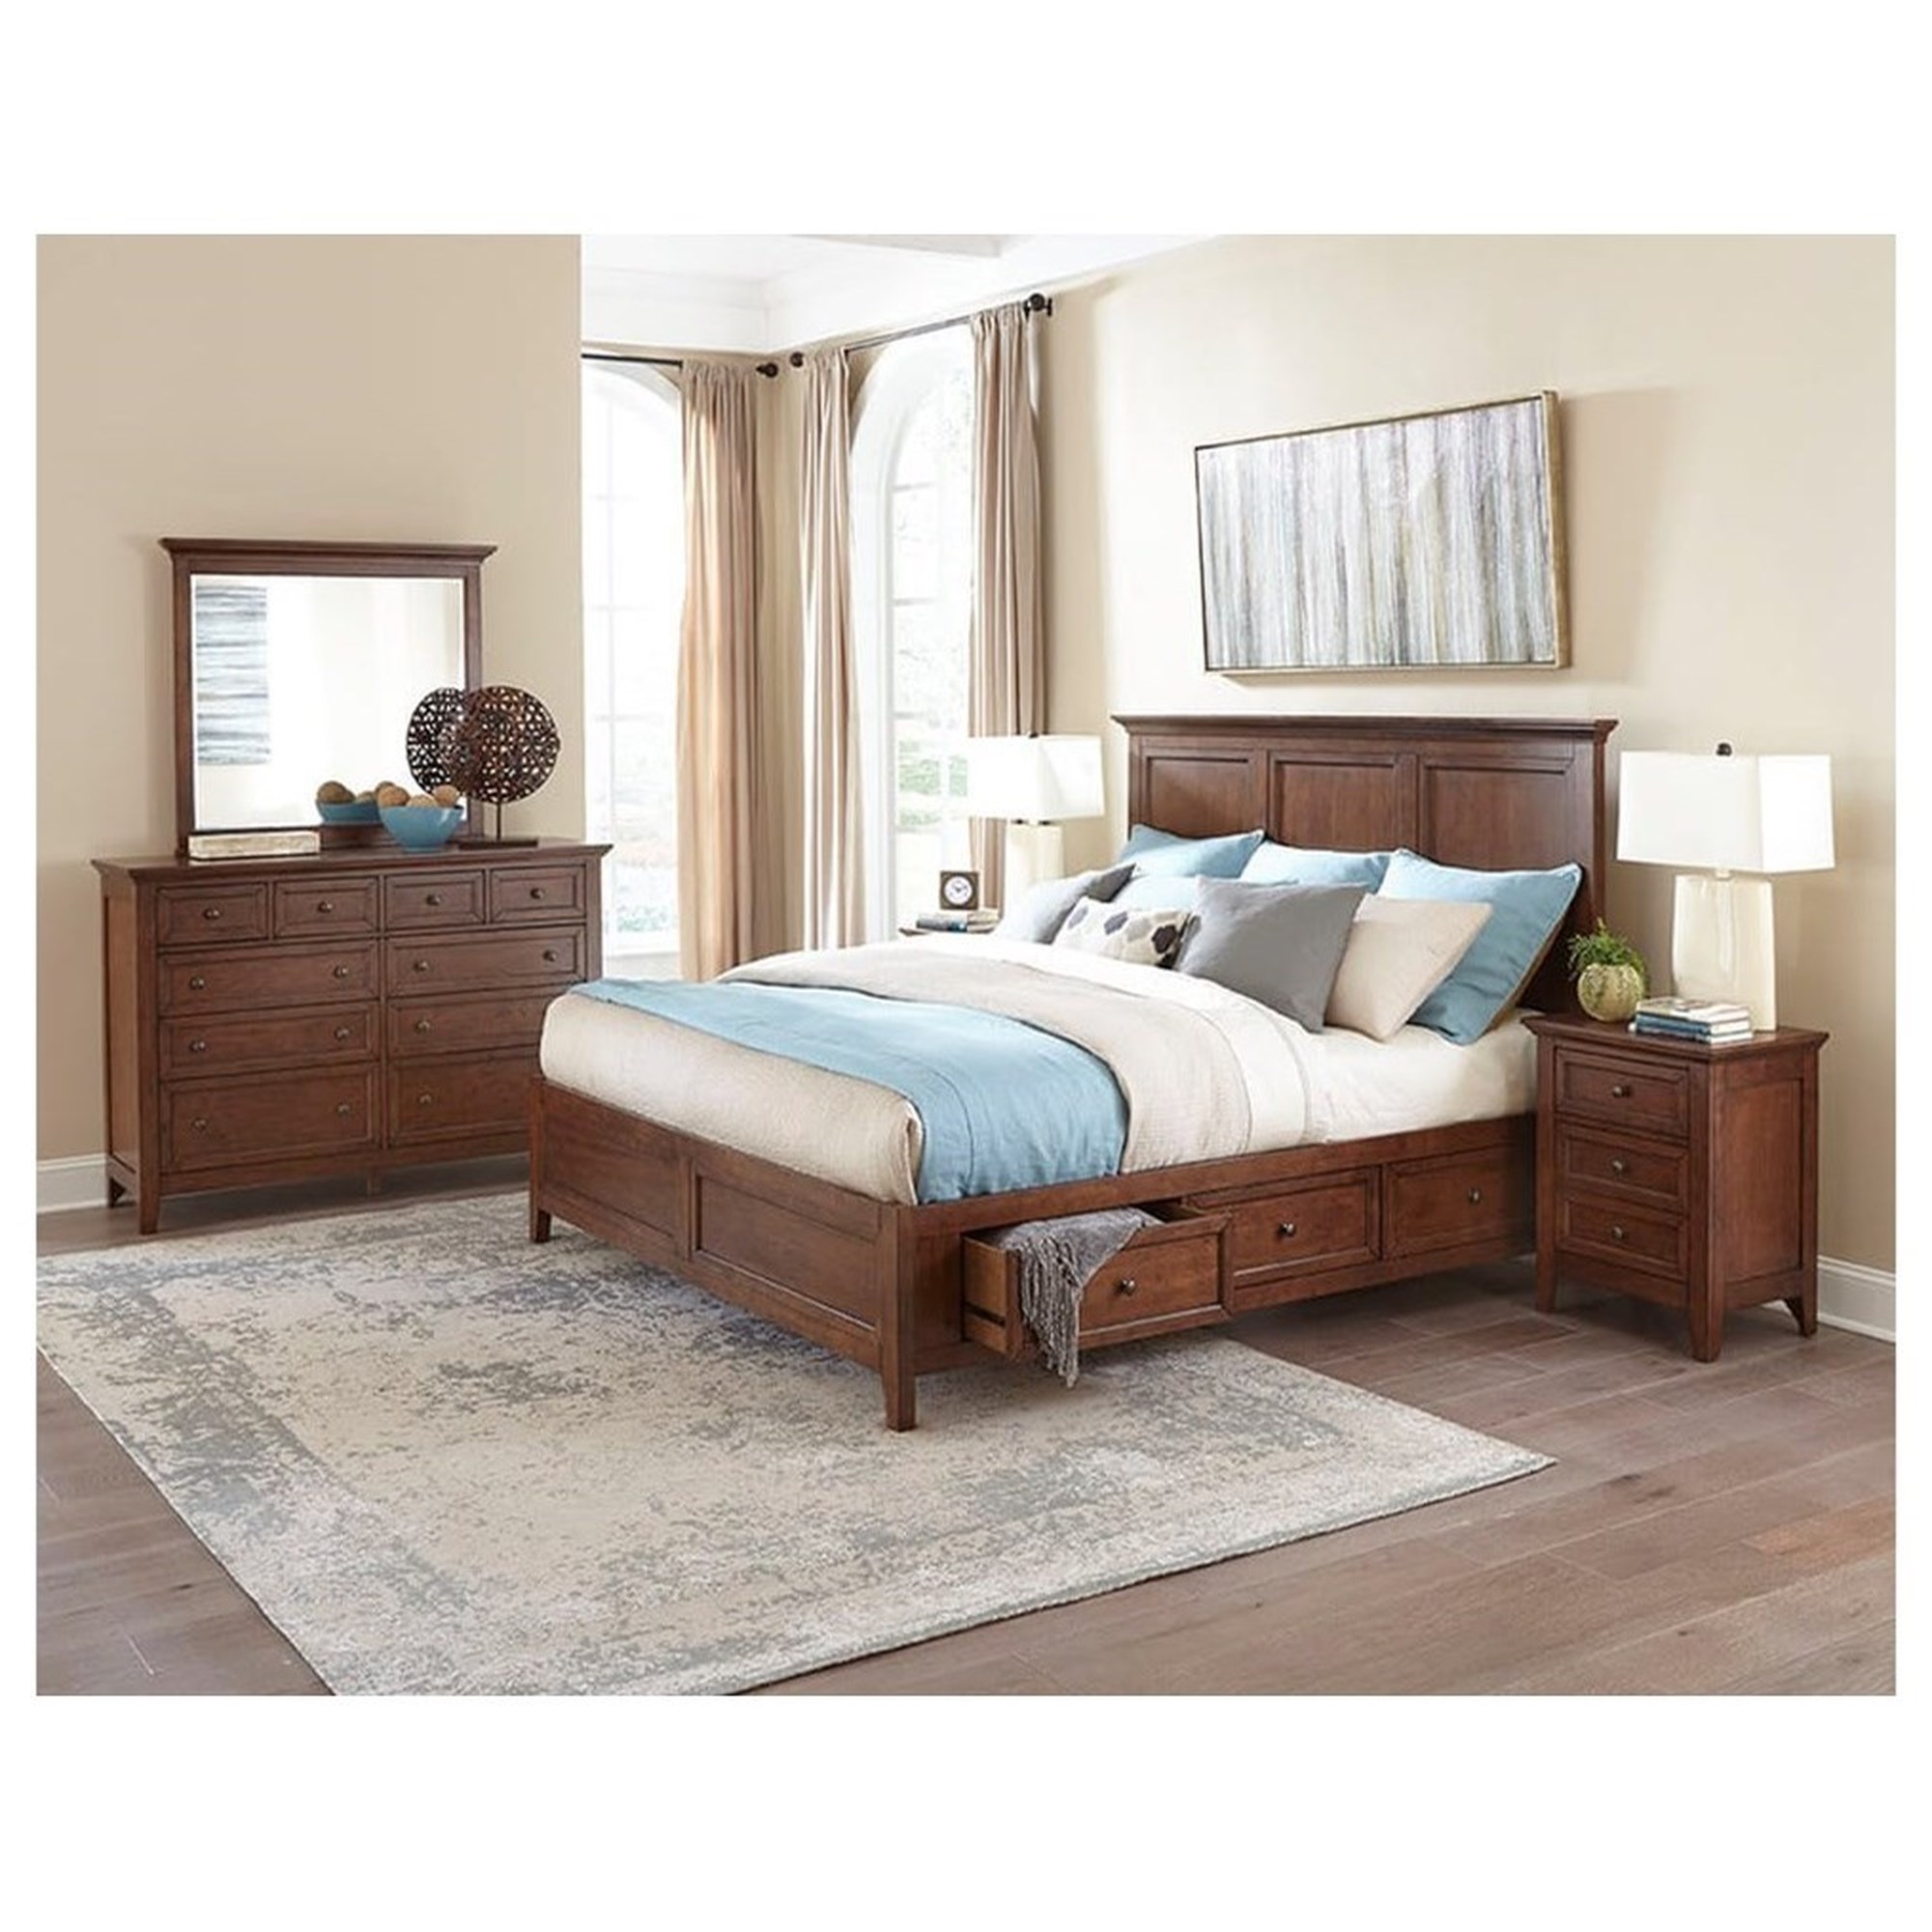 Oak Park 12 Drawer Storage Bed Intercon Furniture, 3 Reviews